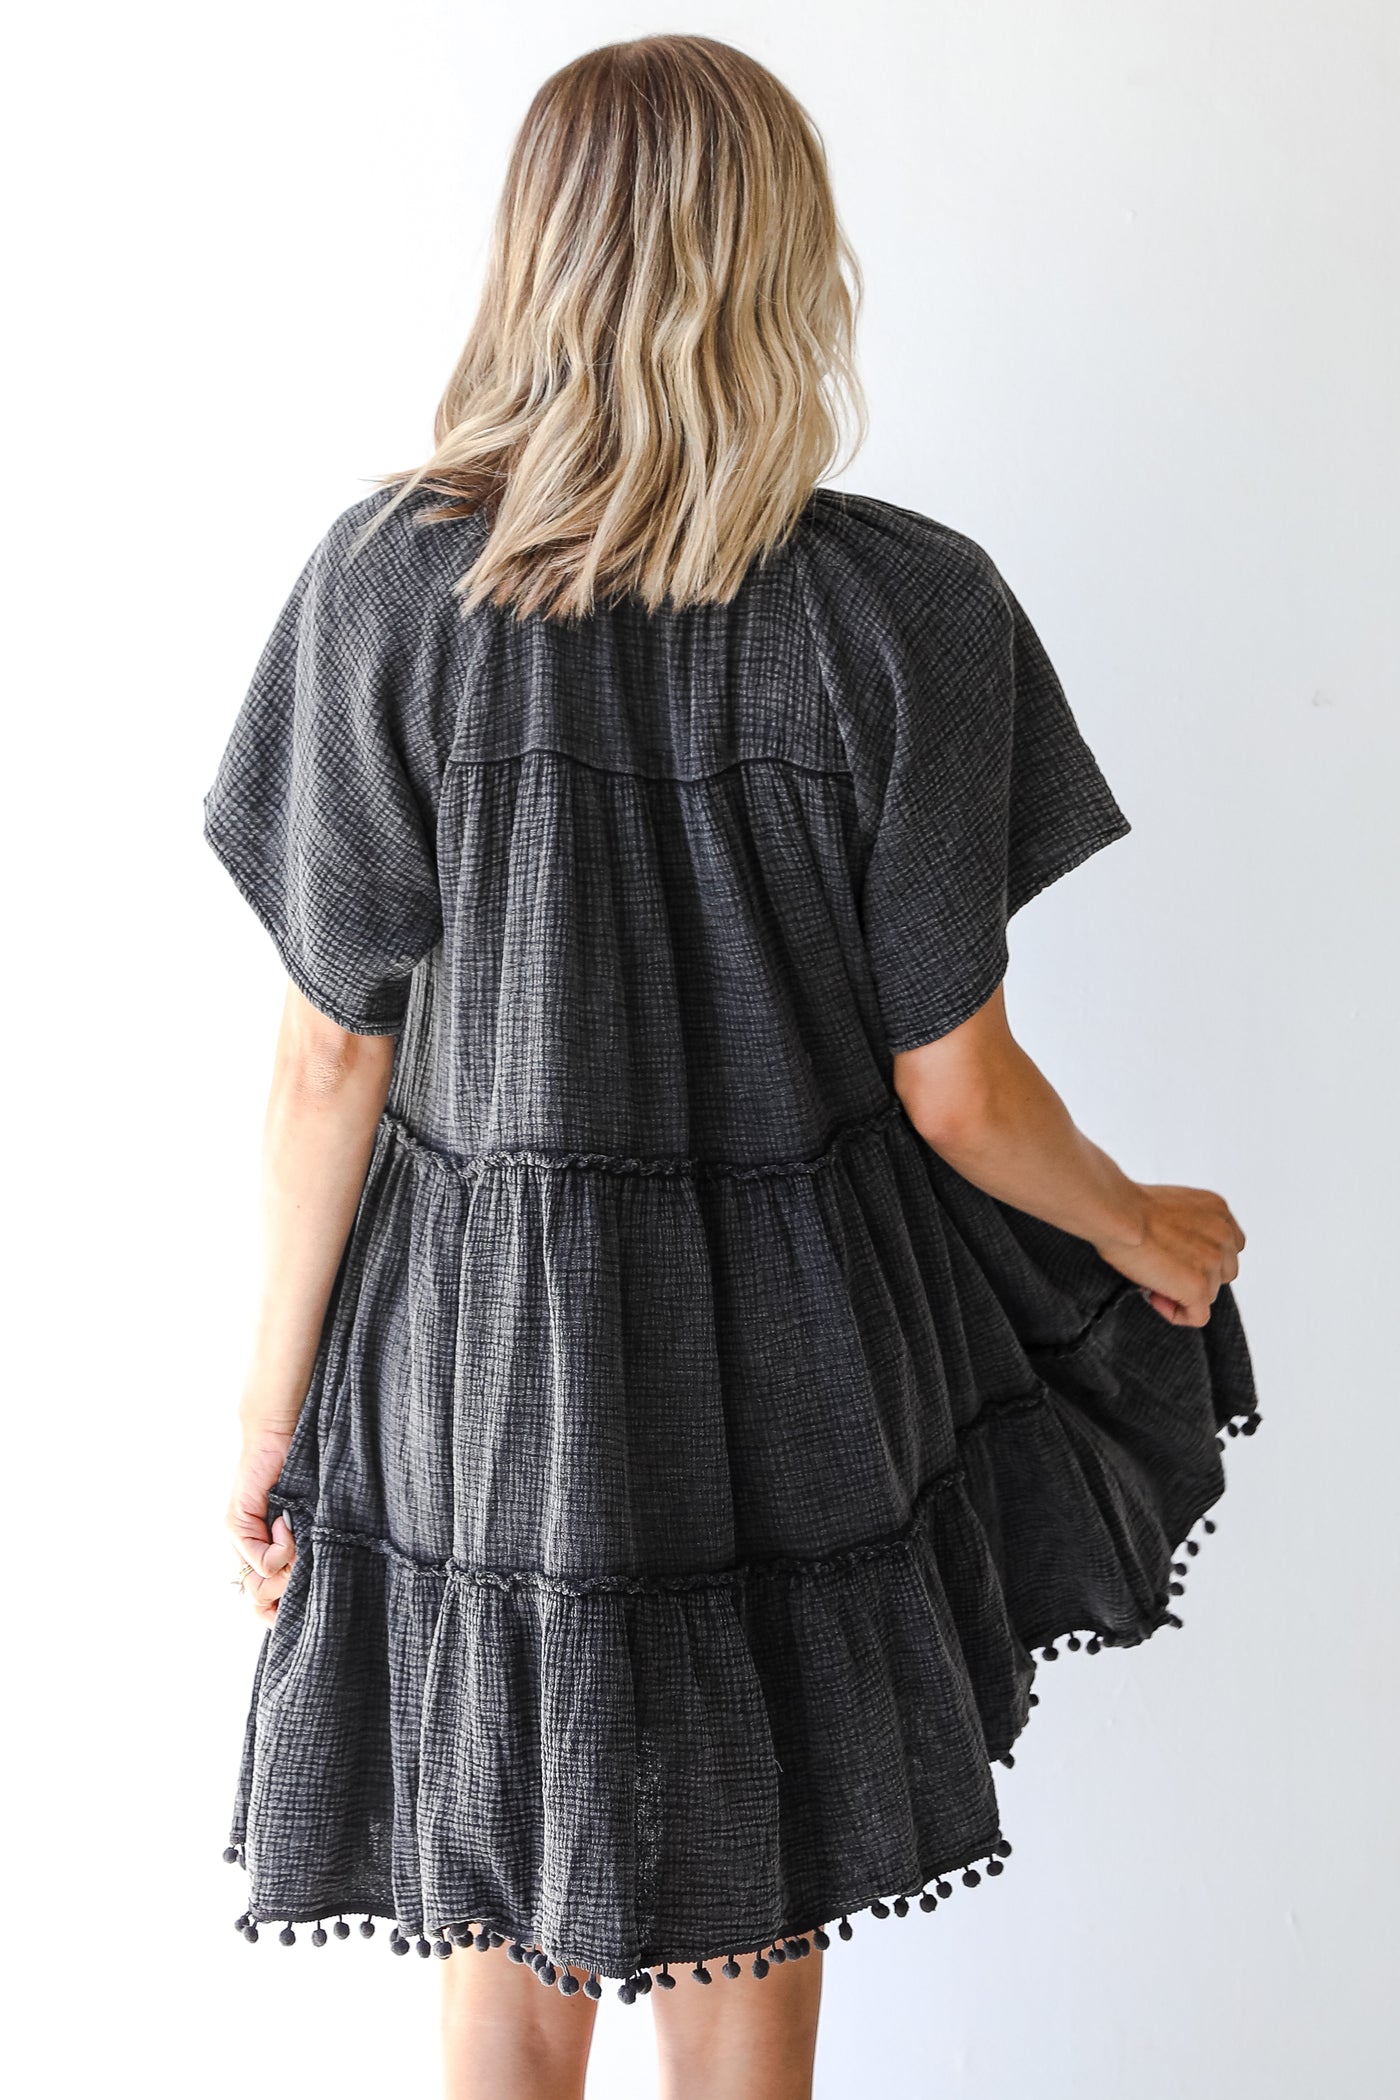 Linen Mini Dress in black back view